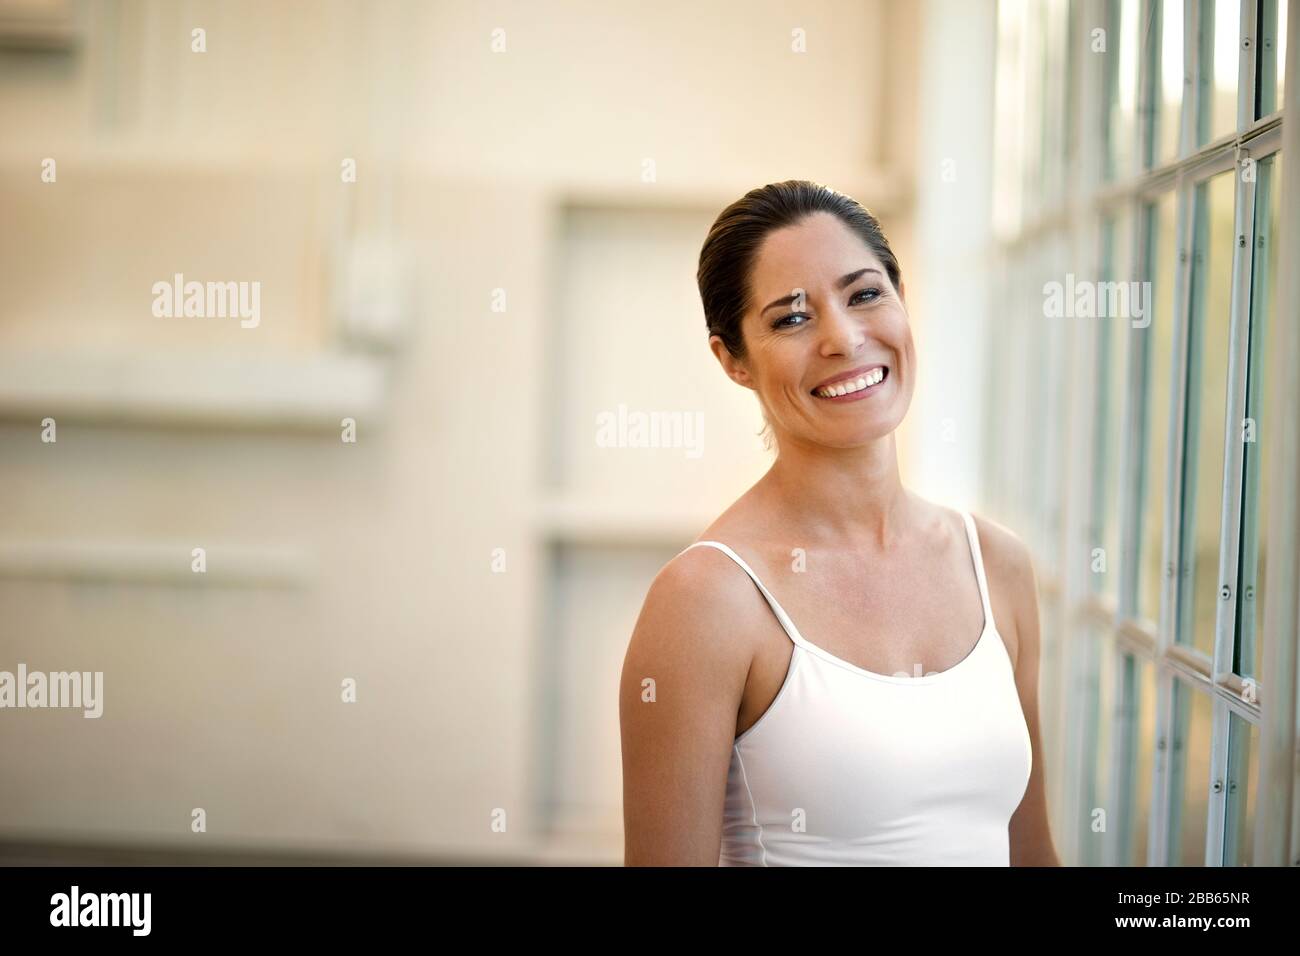 Portrait of a smiling ballerina. Stock Photo